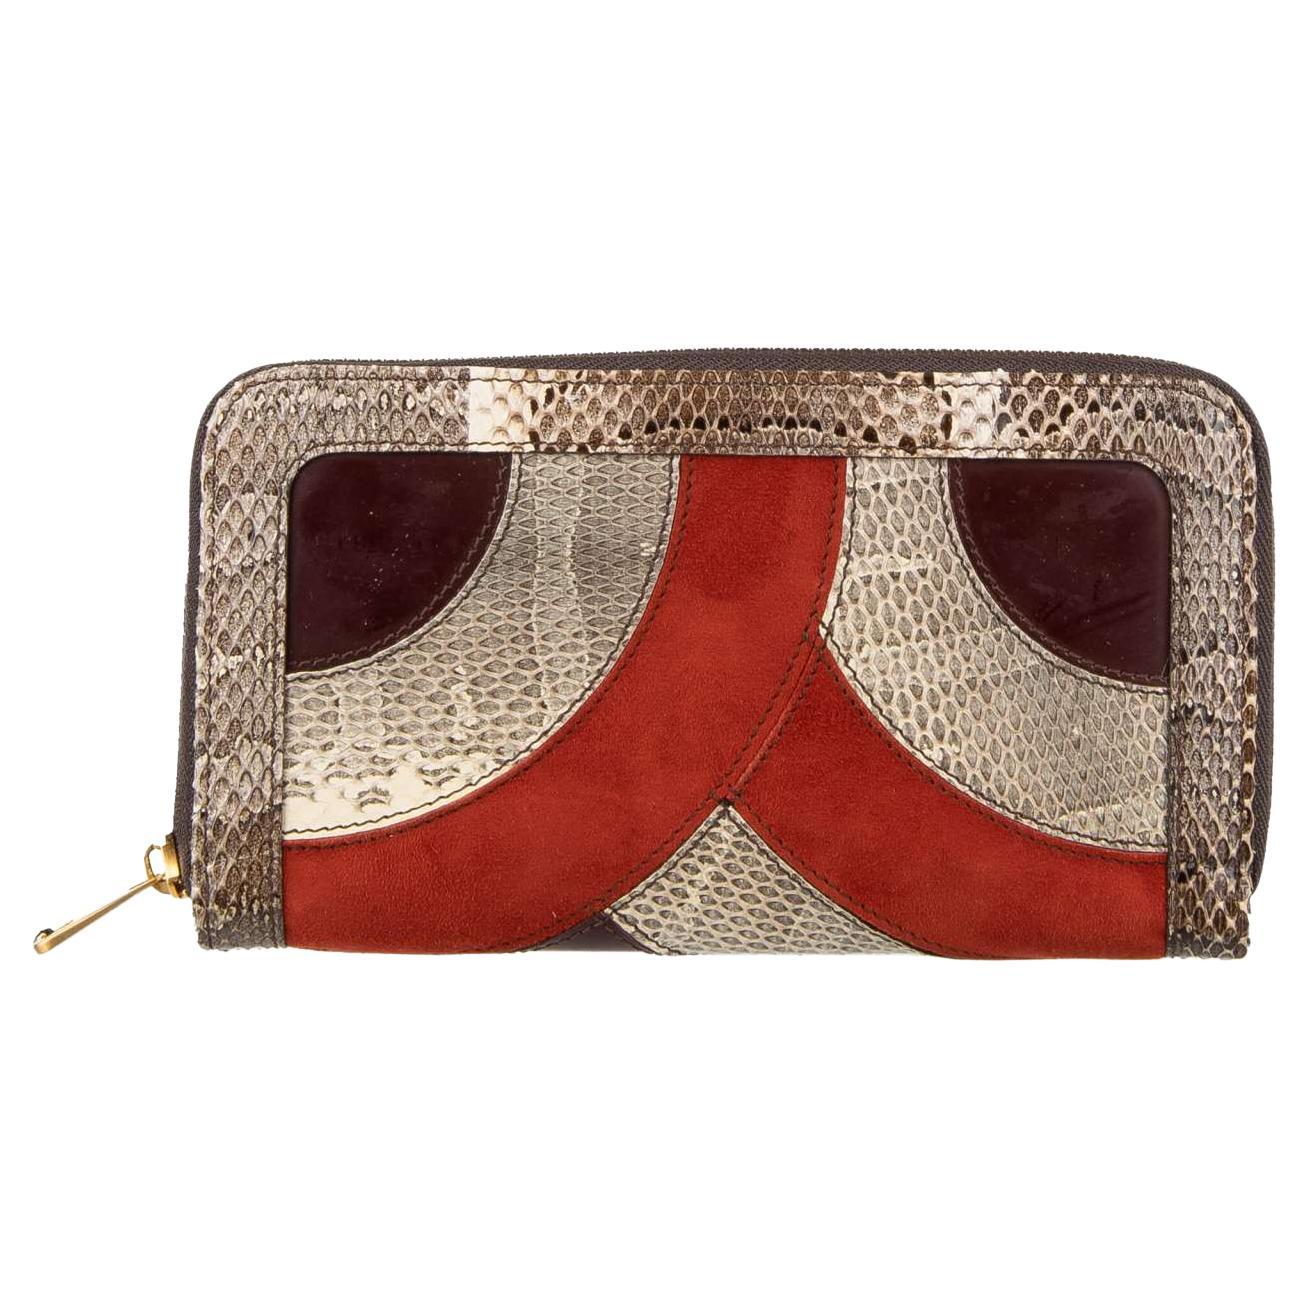 D&G Patchwork Snakeskin Suede Leather Zip-Around Wallet Beige Red Brown For Sale